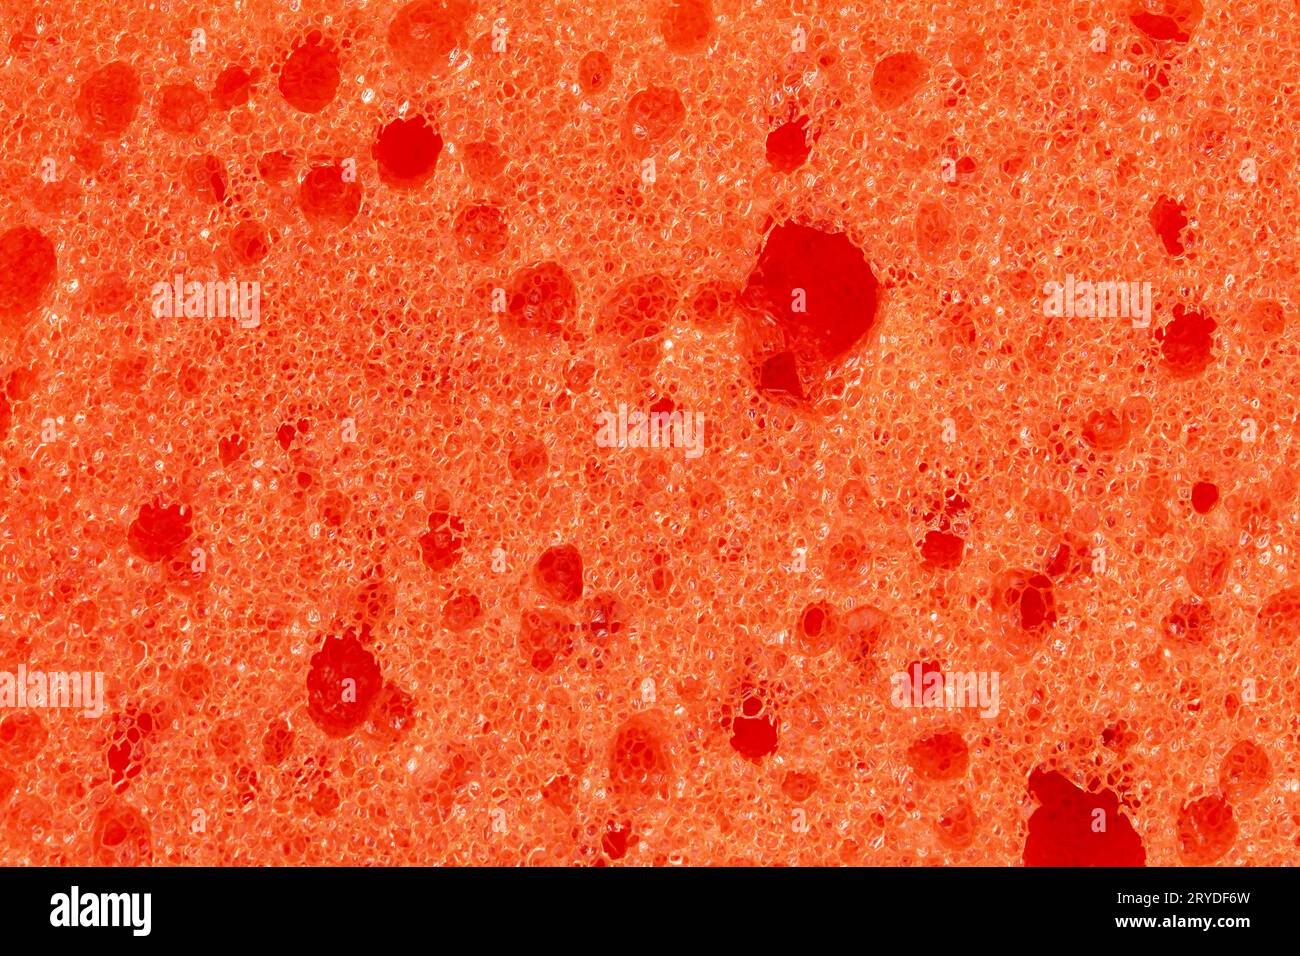 Abstract embossed orange background - the surface of a soft sanitary sponge. Orange foam sponge close-up Stock Photo